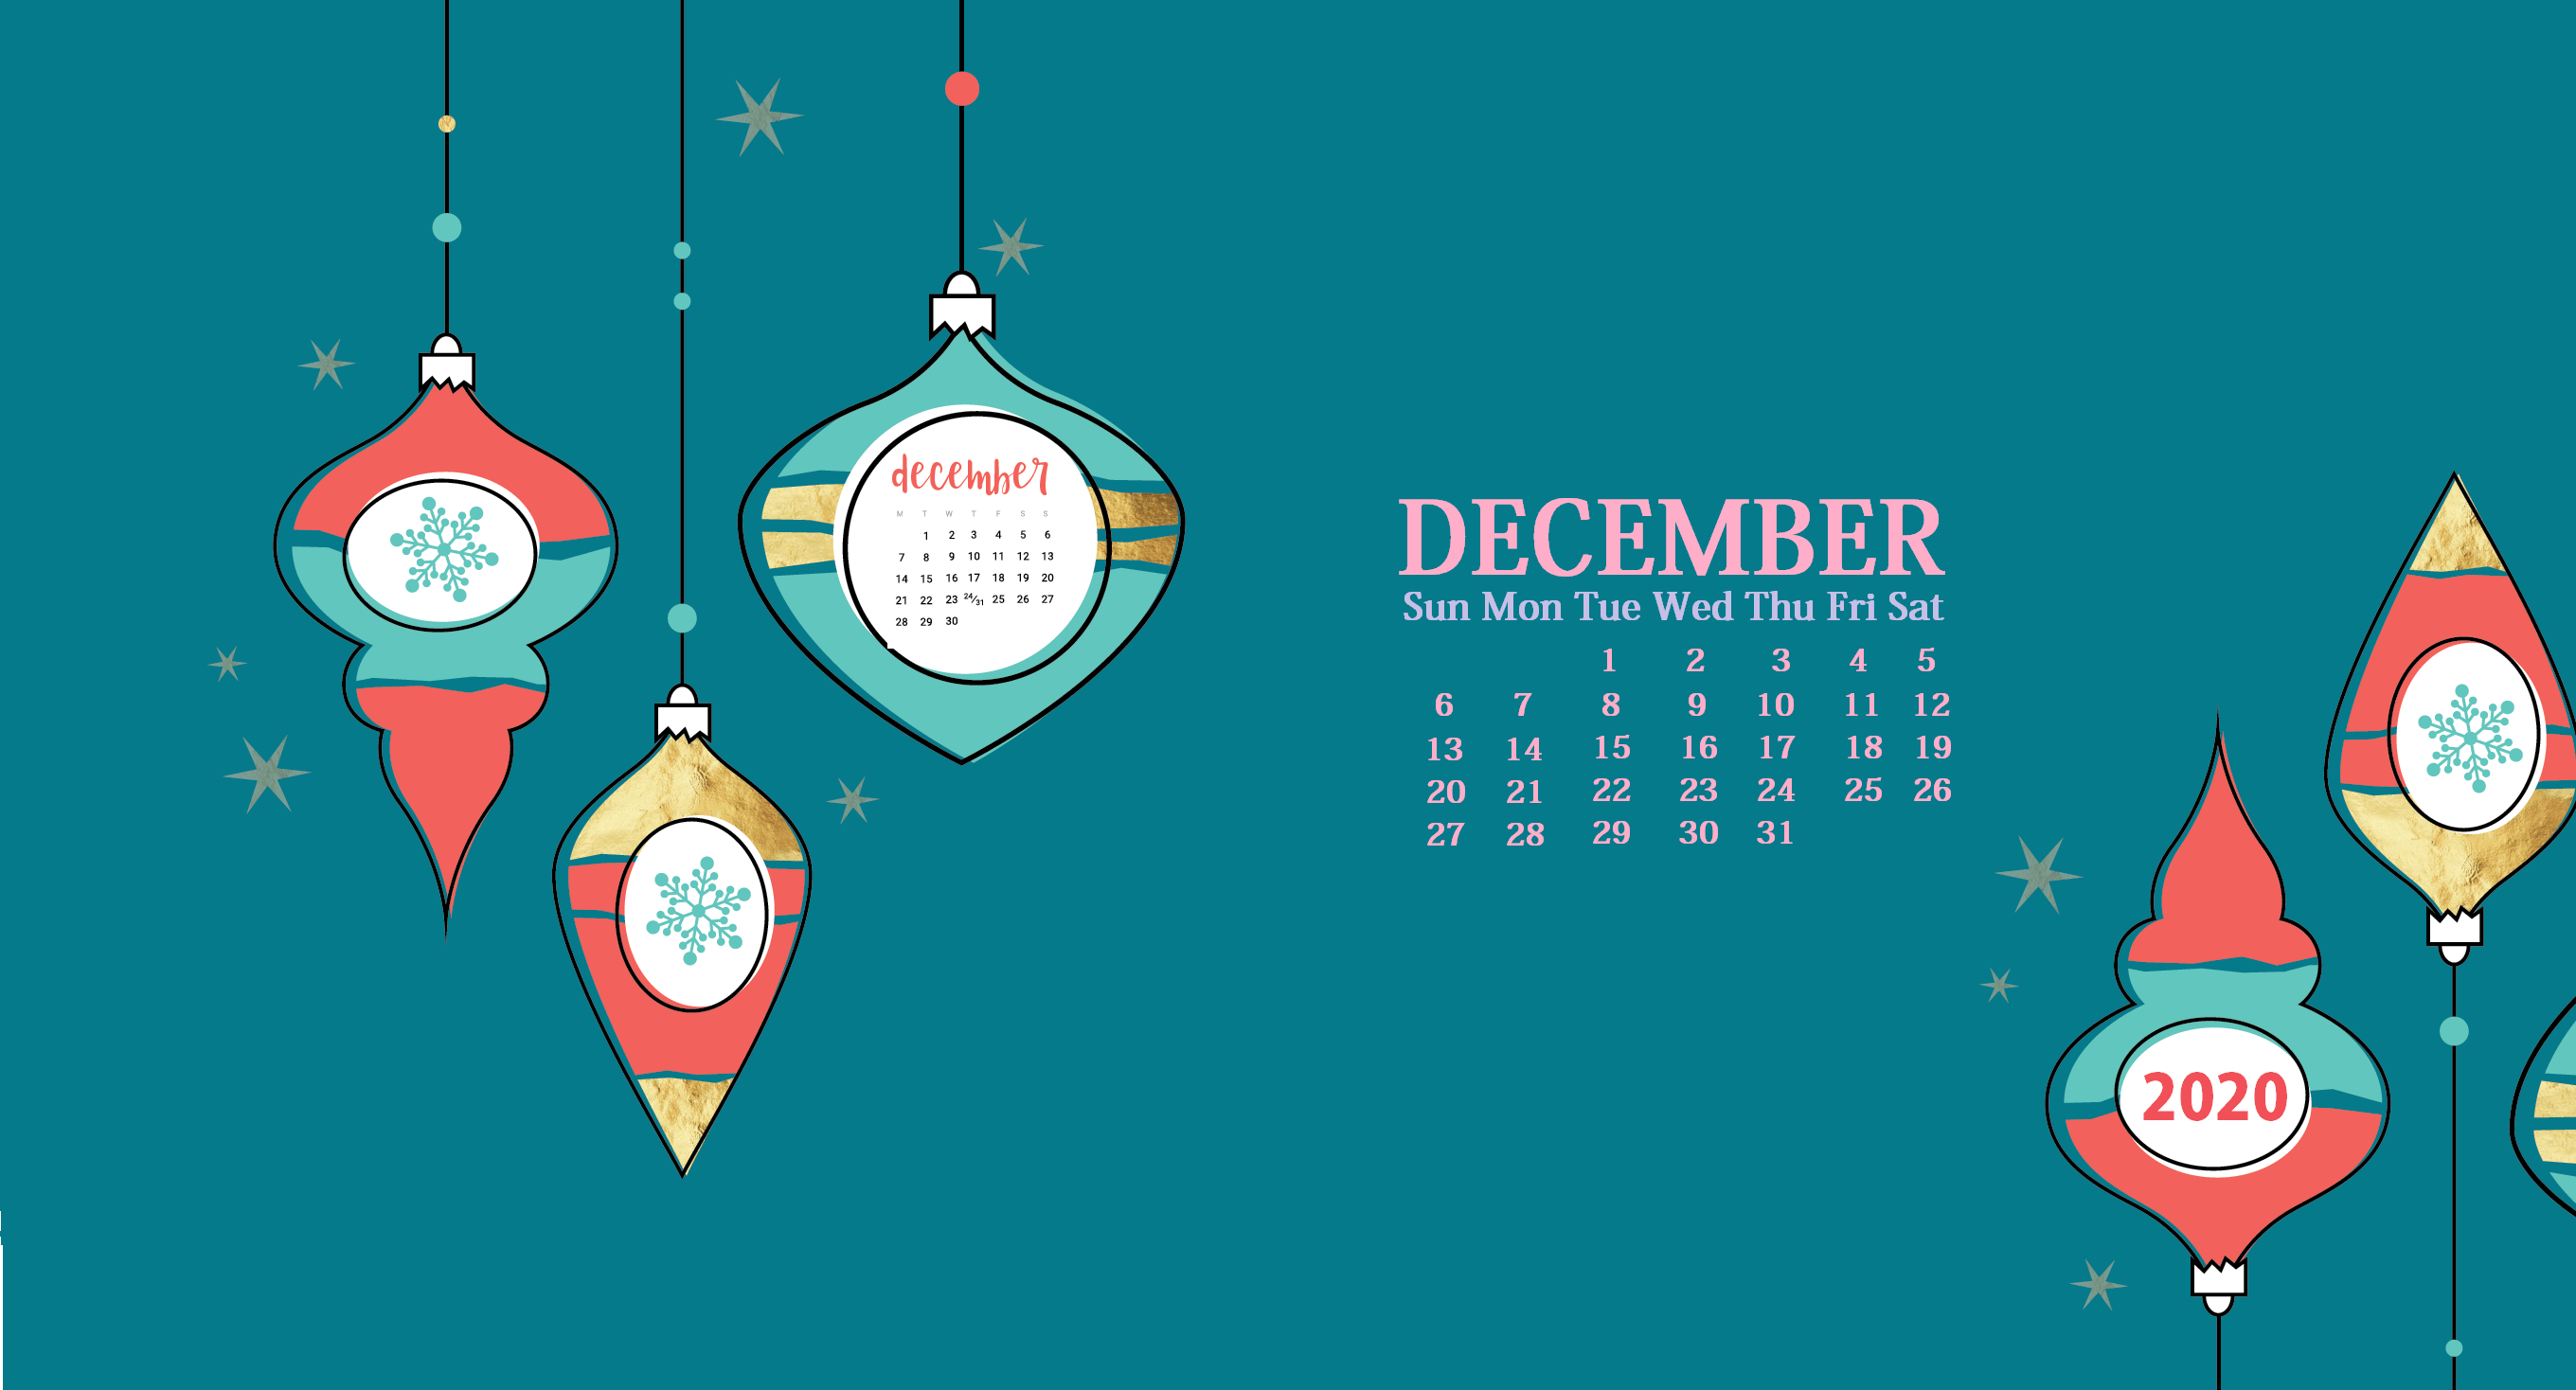 December 2020 Calendar Wallpaper Free December 2020